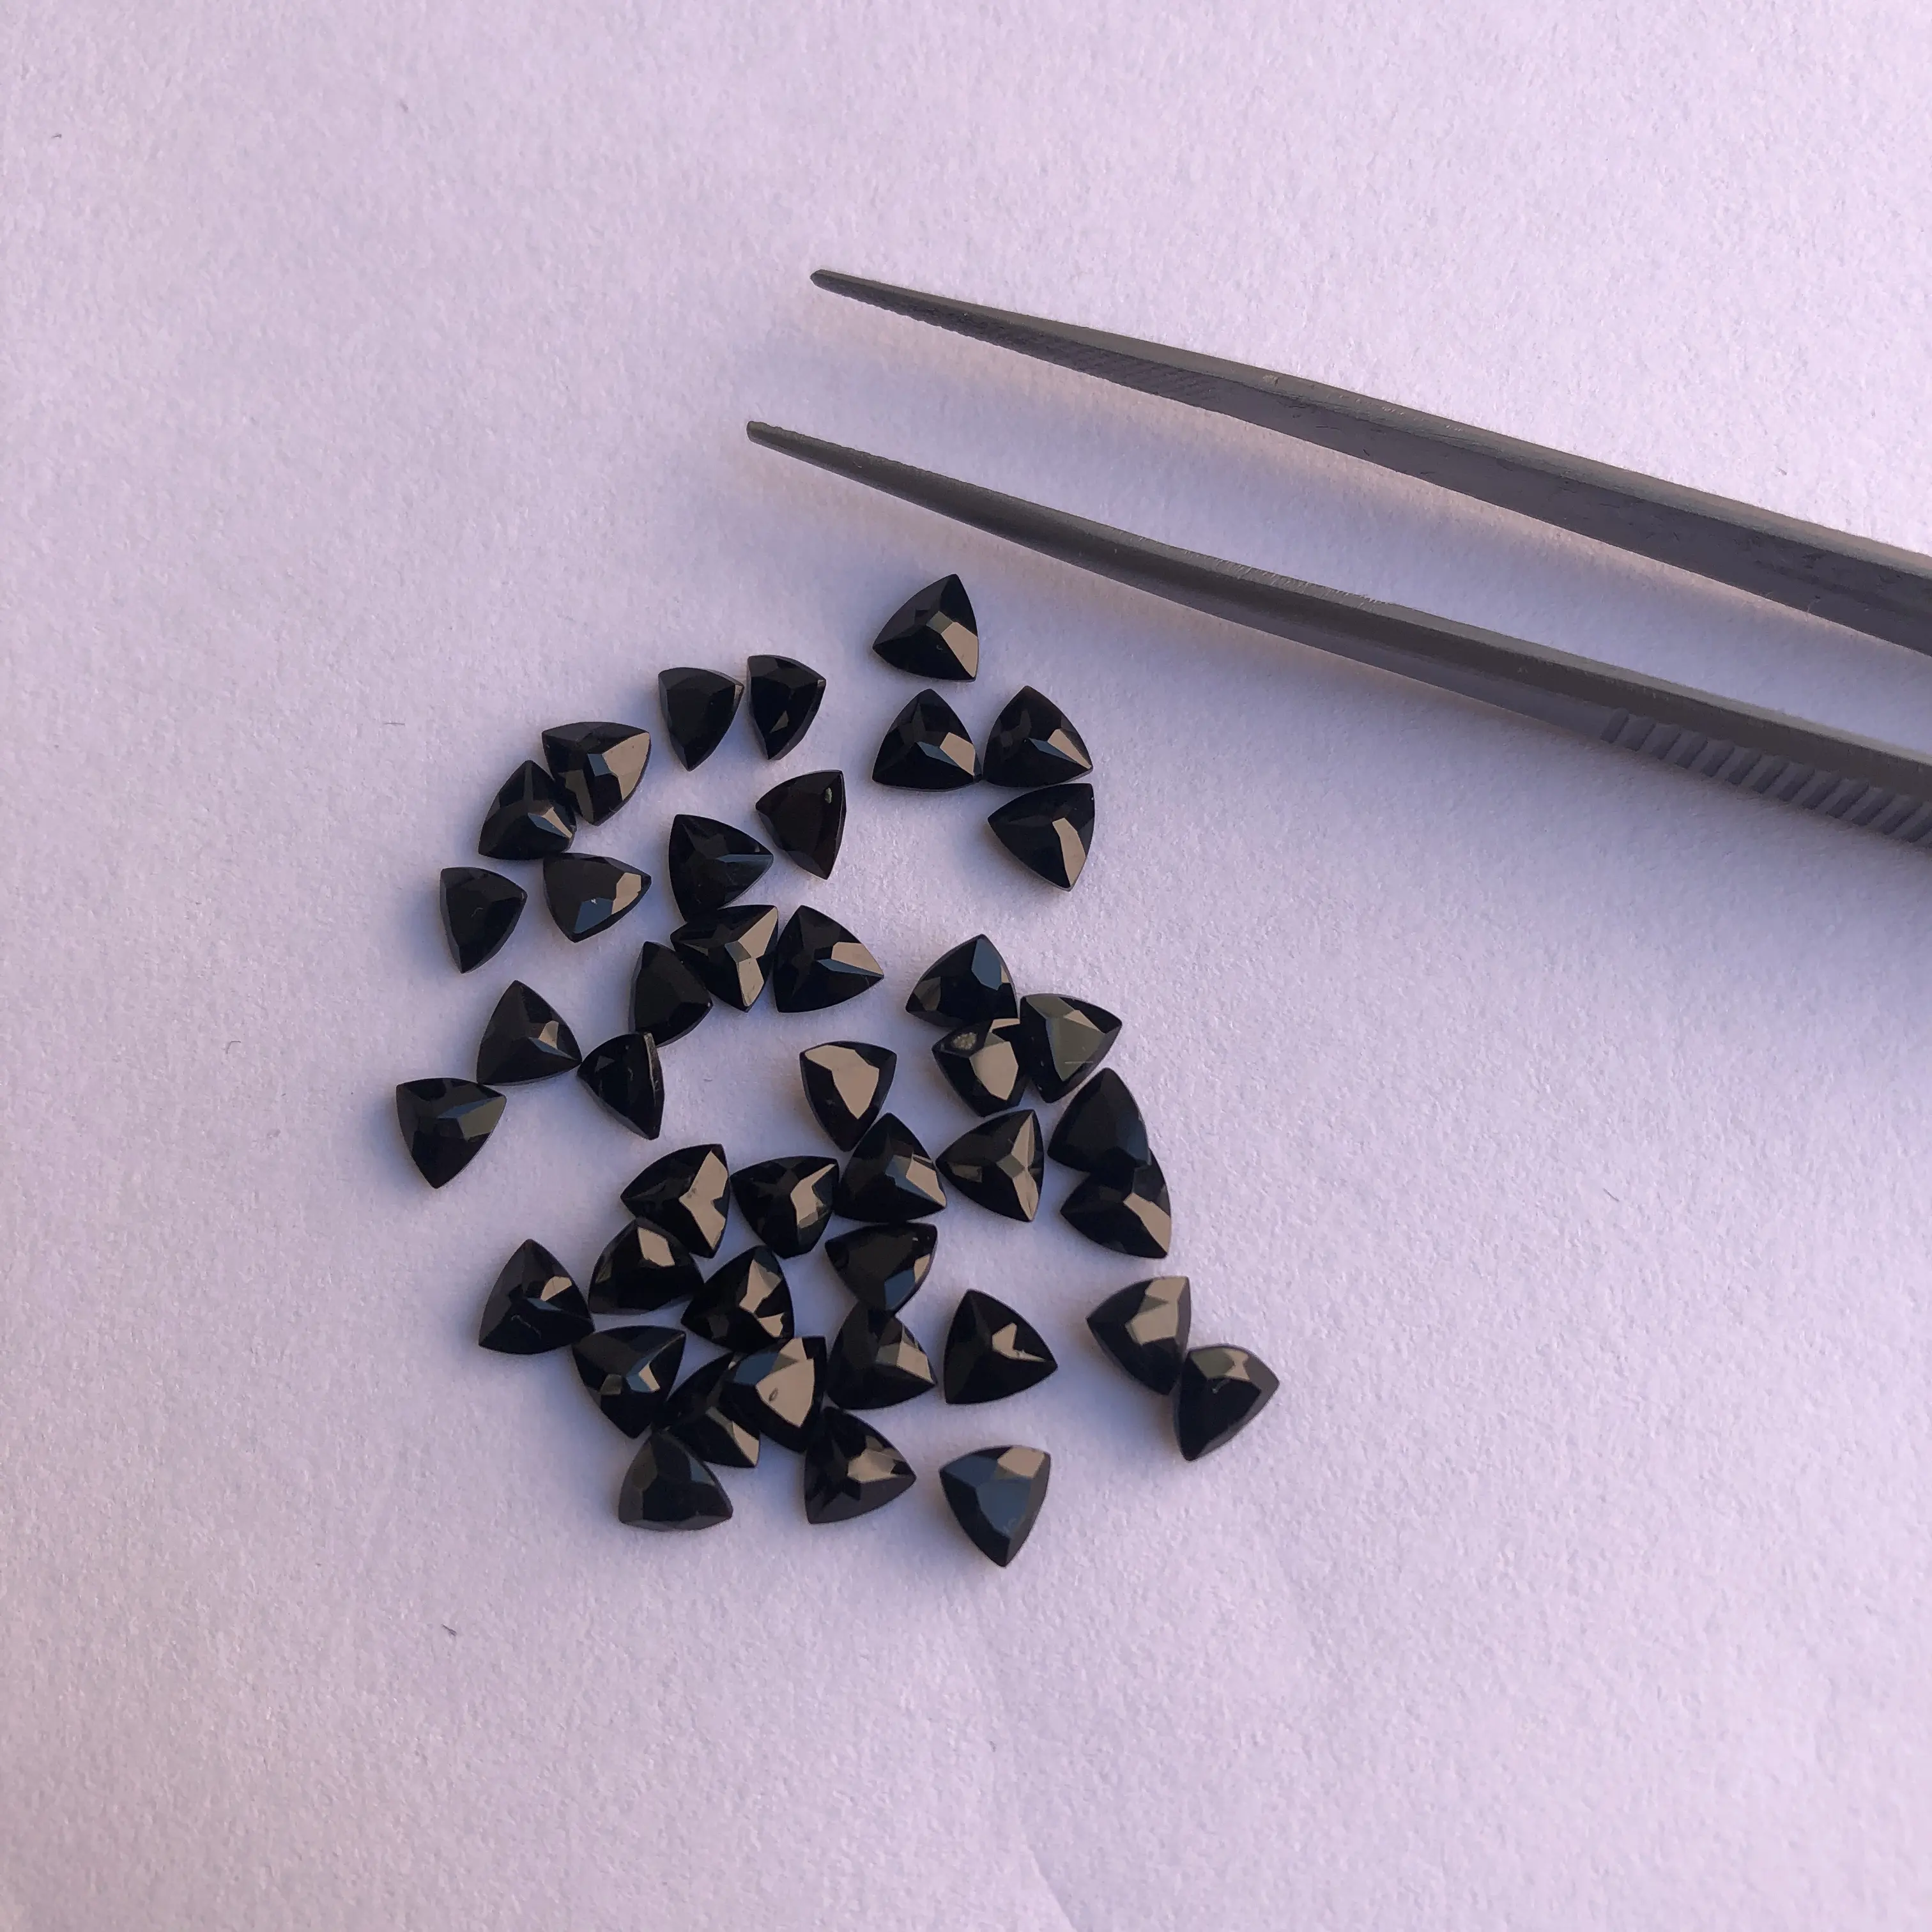 Batu permata hitam alami 5mm berfaset triliun potongan terkalibrasi batu permata harga grosir batu longgar untuk pengaturan perhiasan penjualan reguler